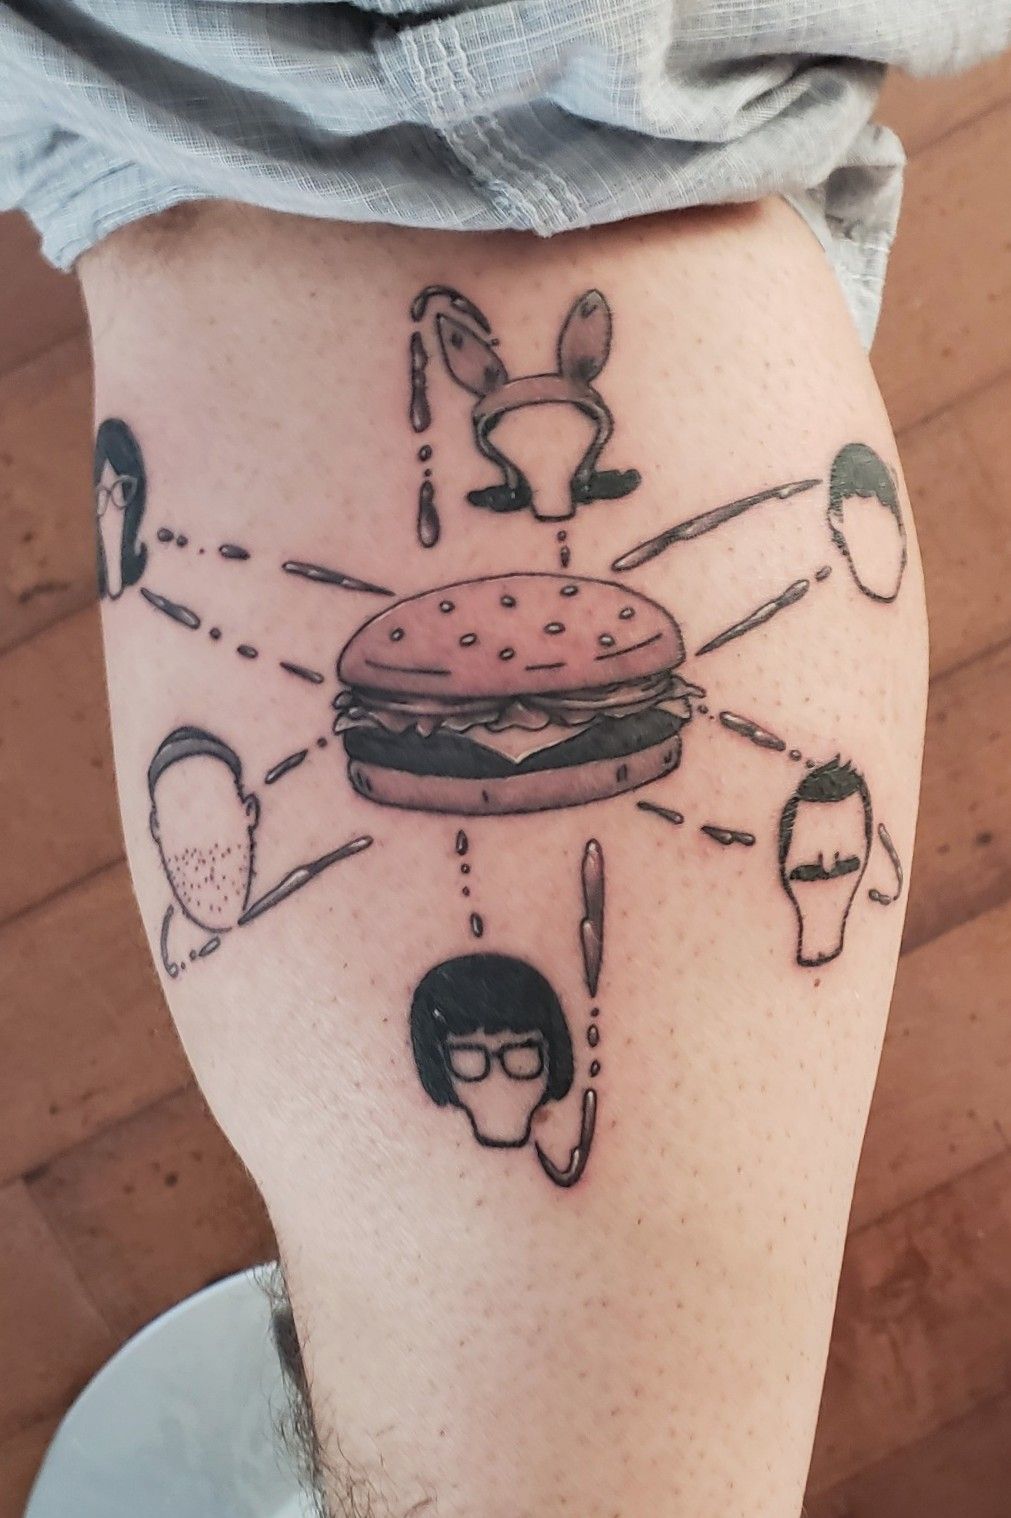 Louise from Bobs Burgers forearm tattoo  Tattoos Bobs burgers tattoo  Hand tattoos